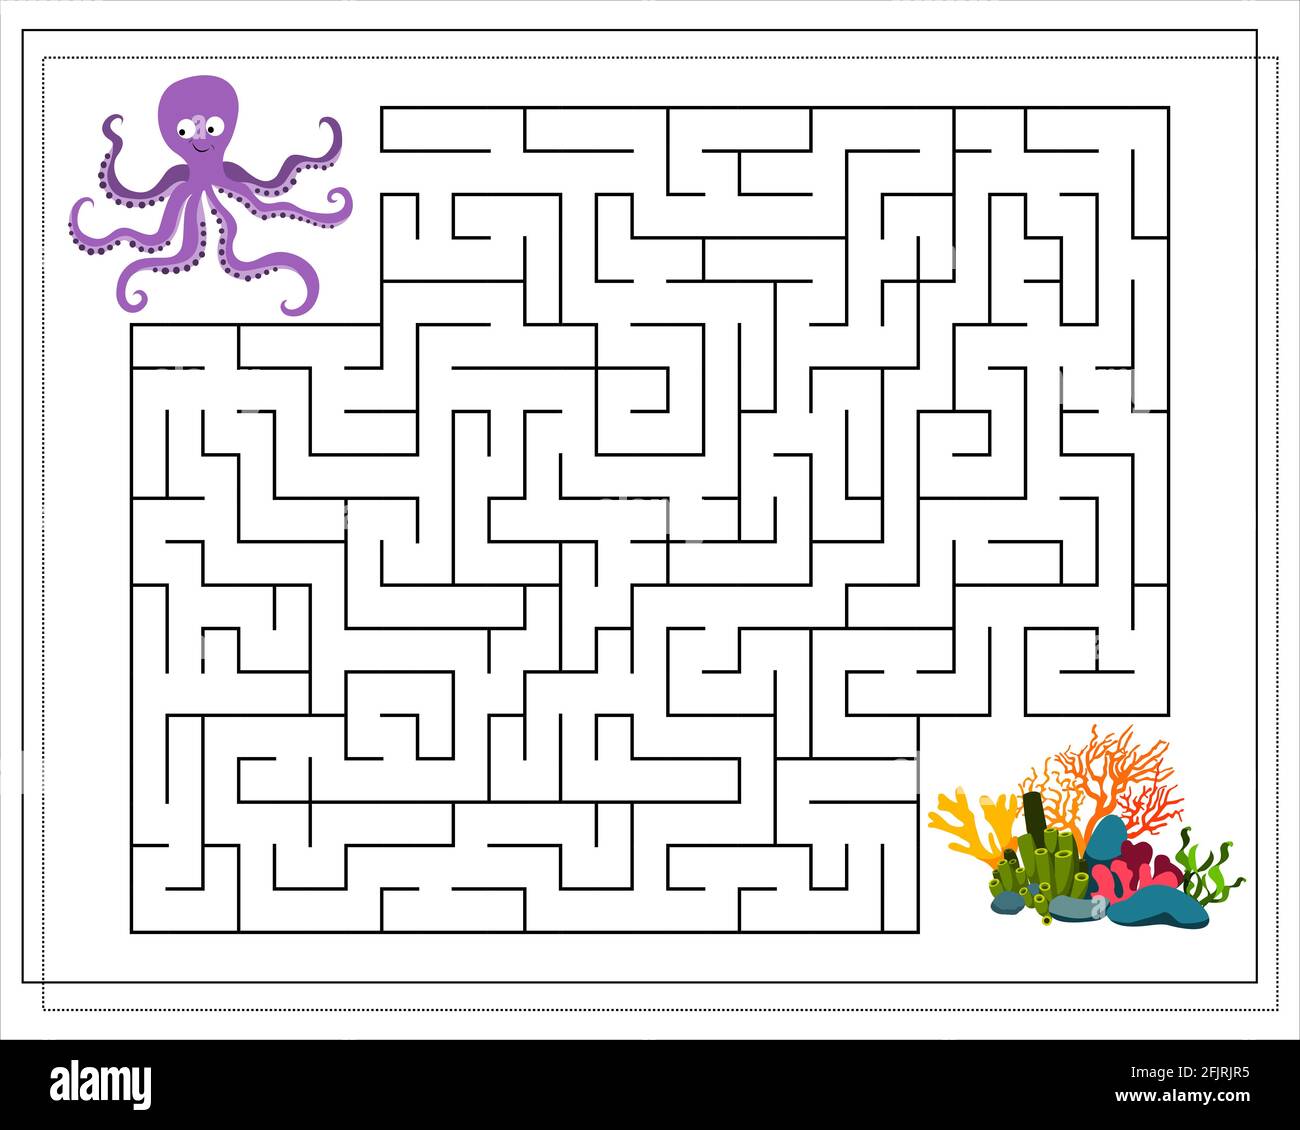 The maze game